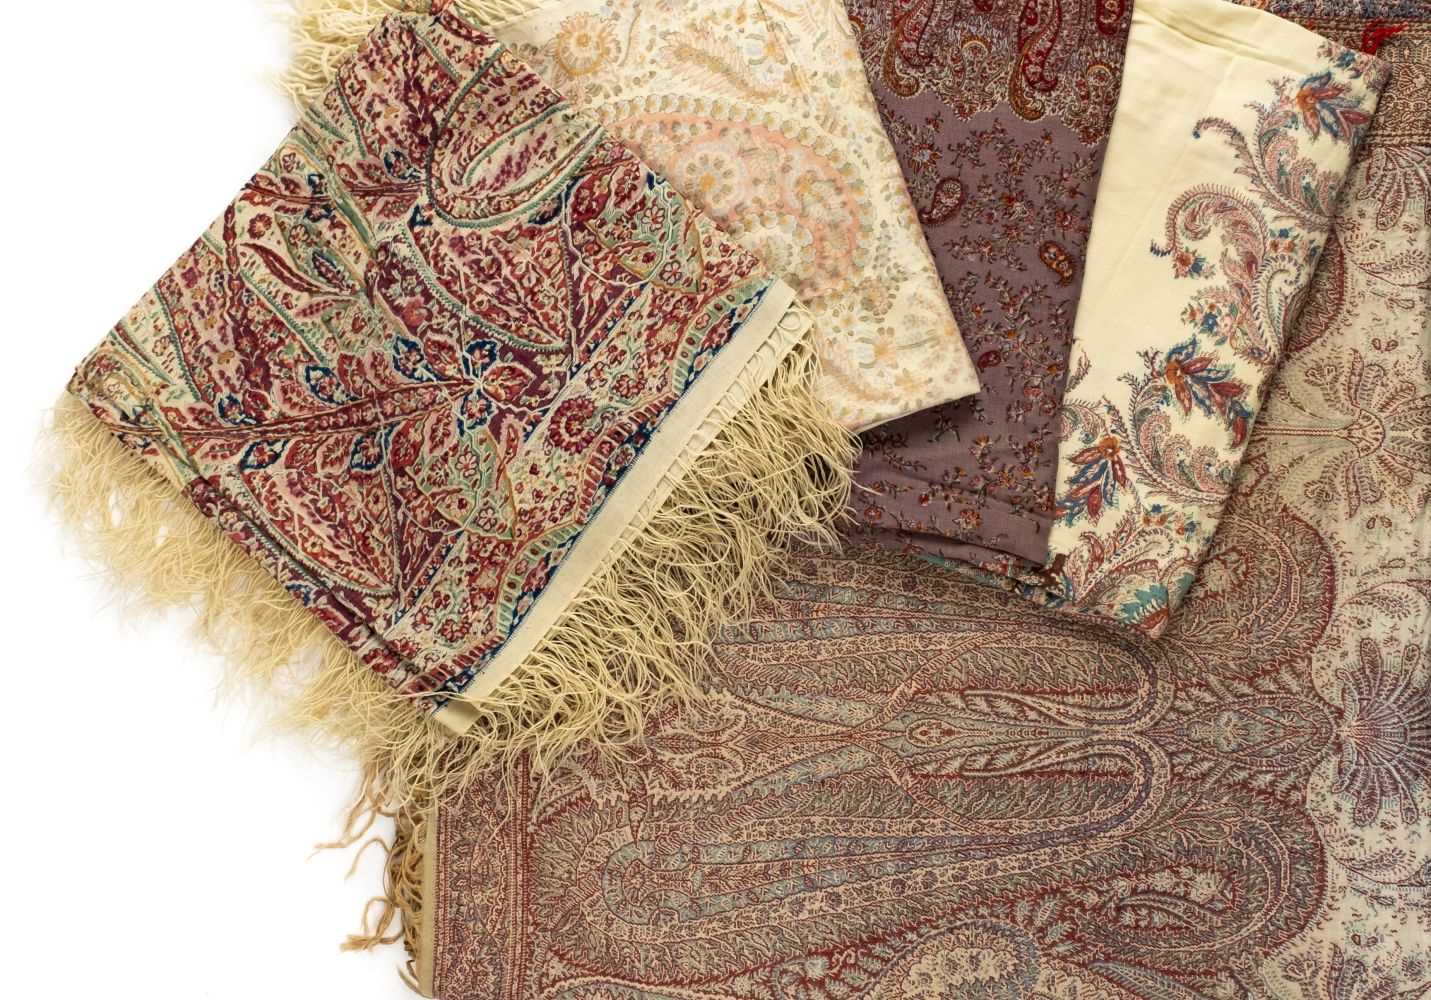 Lot 194 - Shawls. A large woven crinoline shawl, circa 1860s